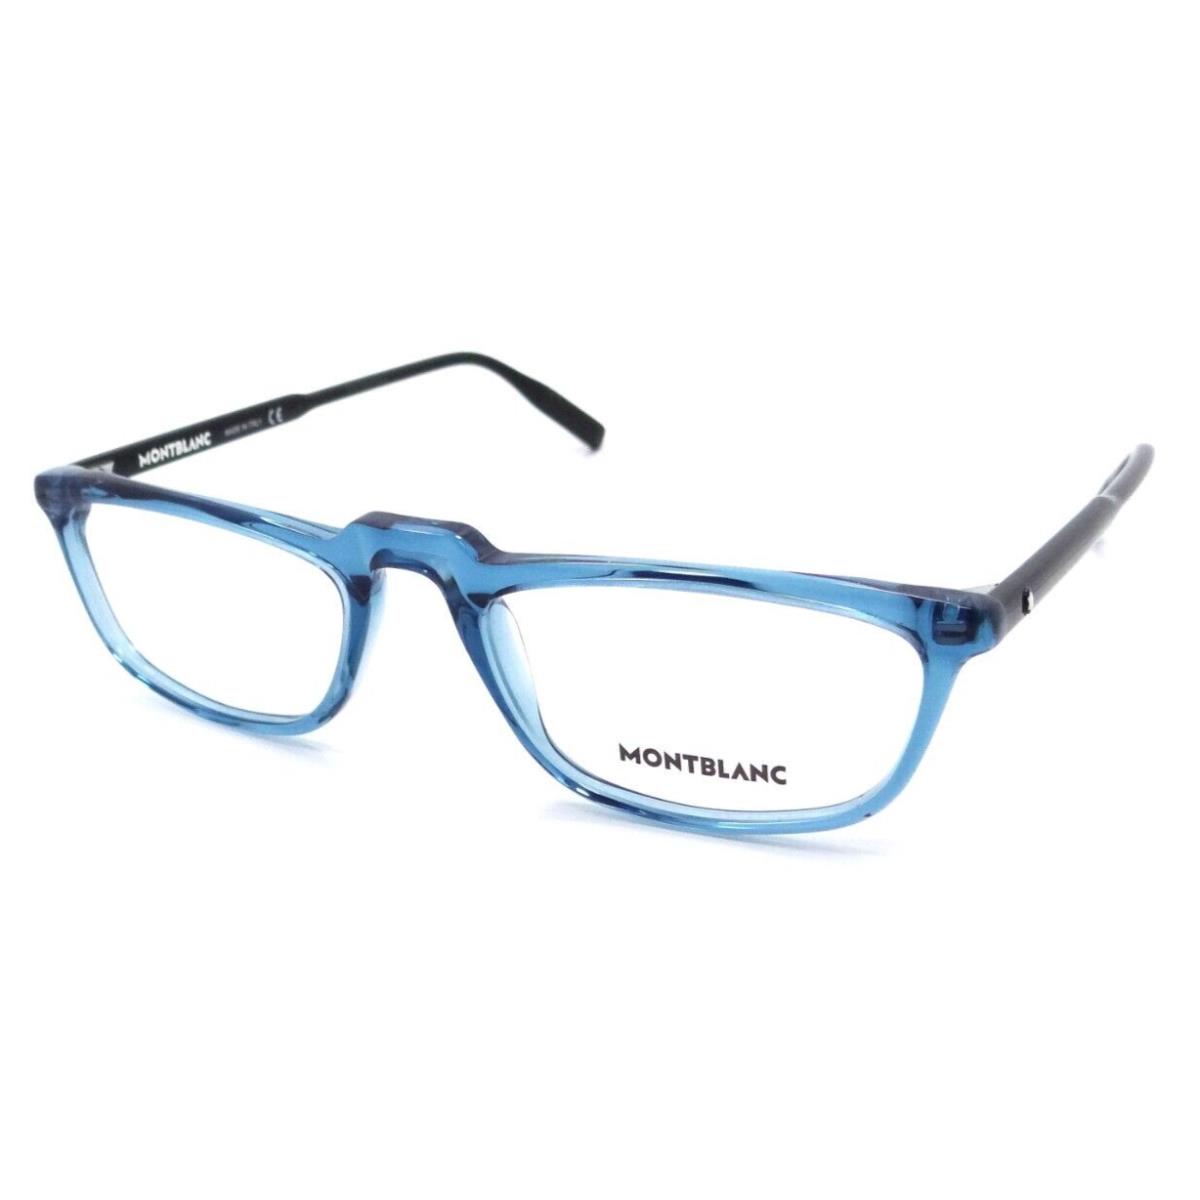 Montblanc Eyeglasses Frames MB0053O 003 54-20-150 Blue / Black Made in Italy